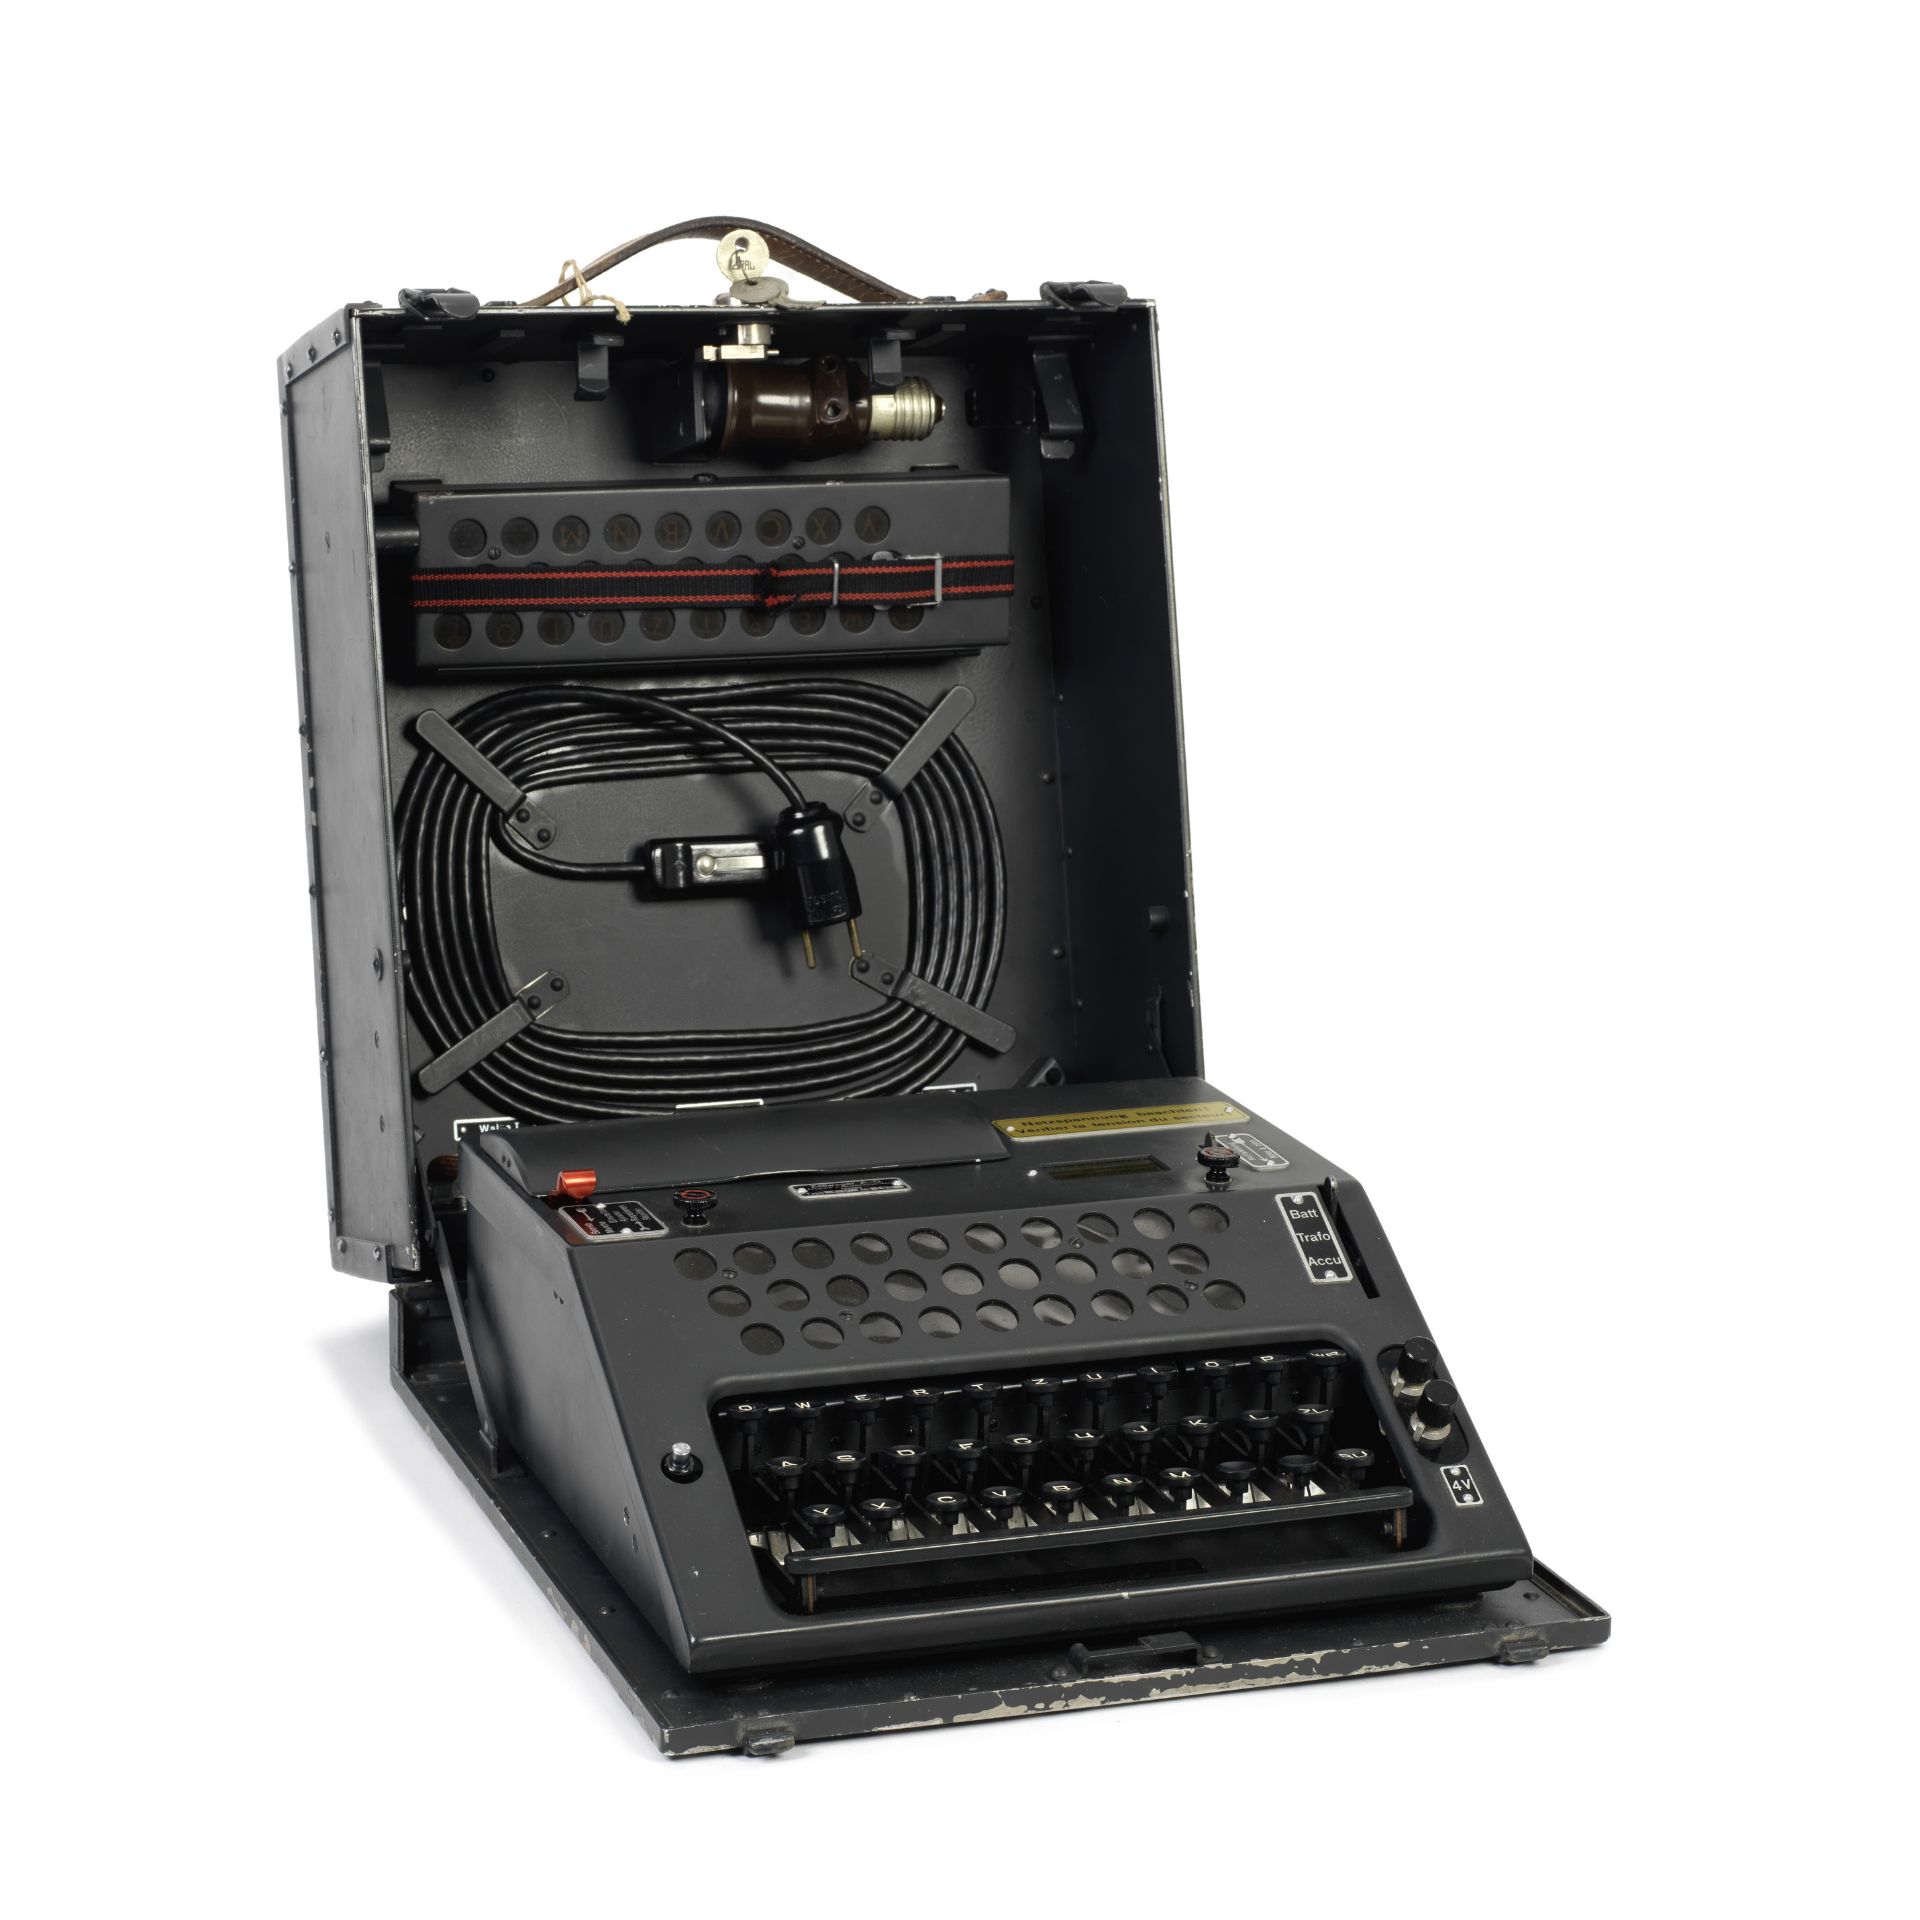 A NEMA TD 193 Cipher Machine, Swiss, mid-20th century,